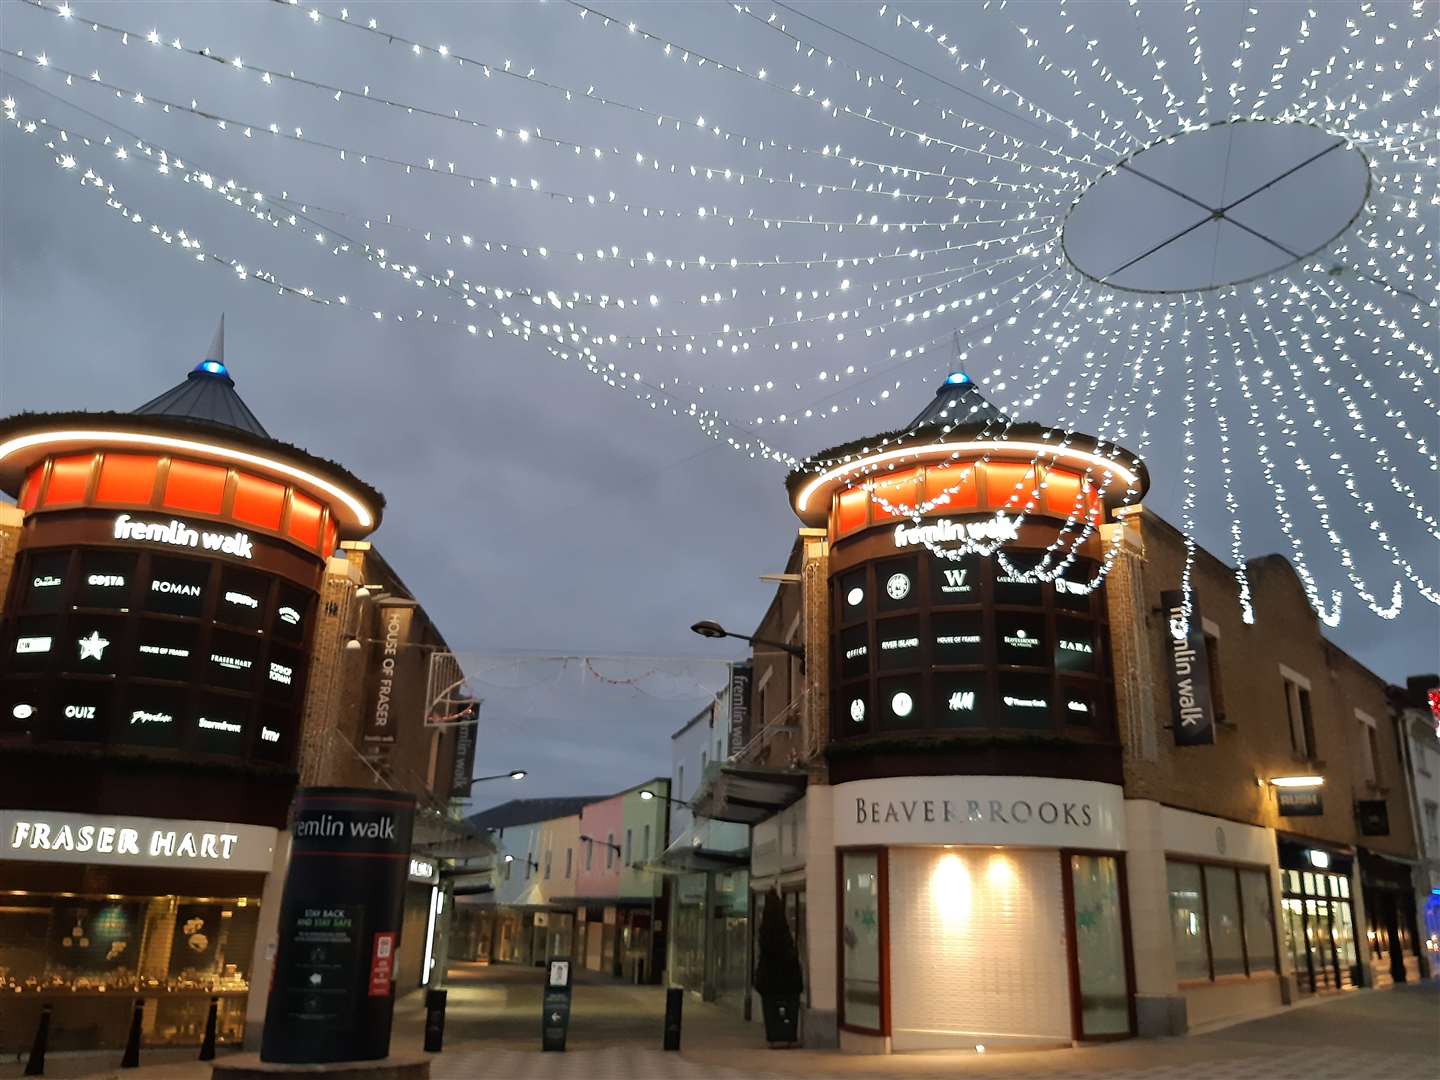 Maidstone's Christmas lights at Week Street and Fremlin Walk